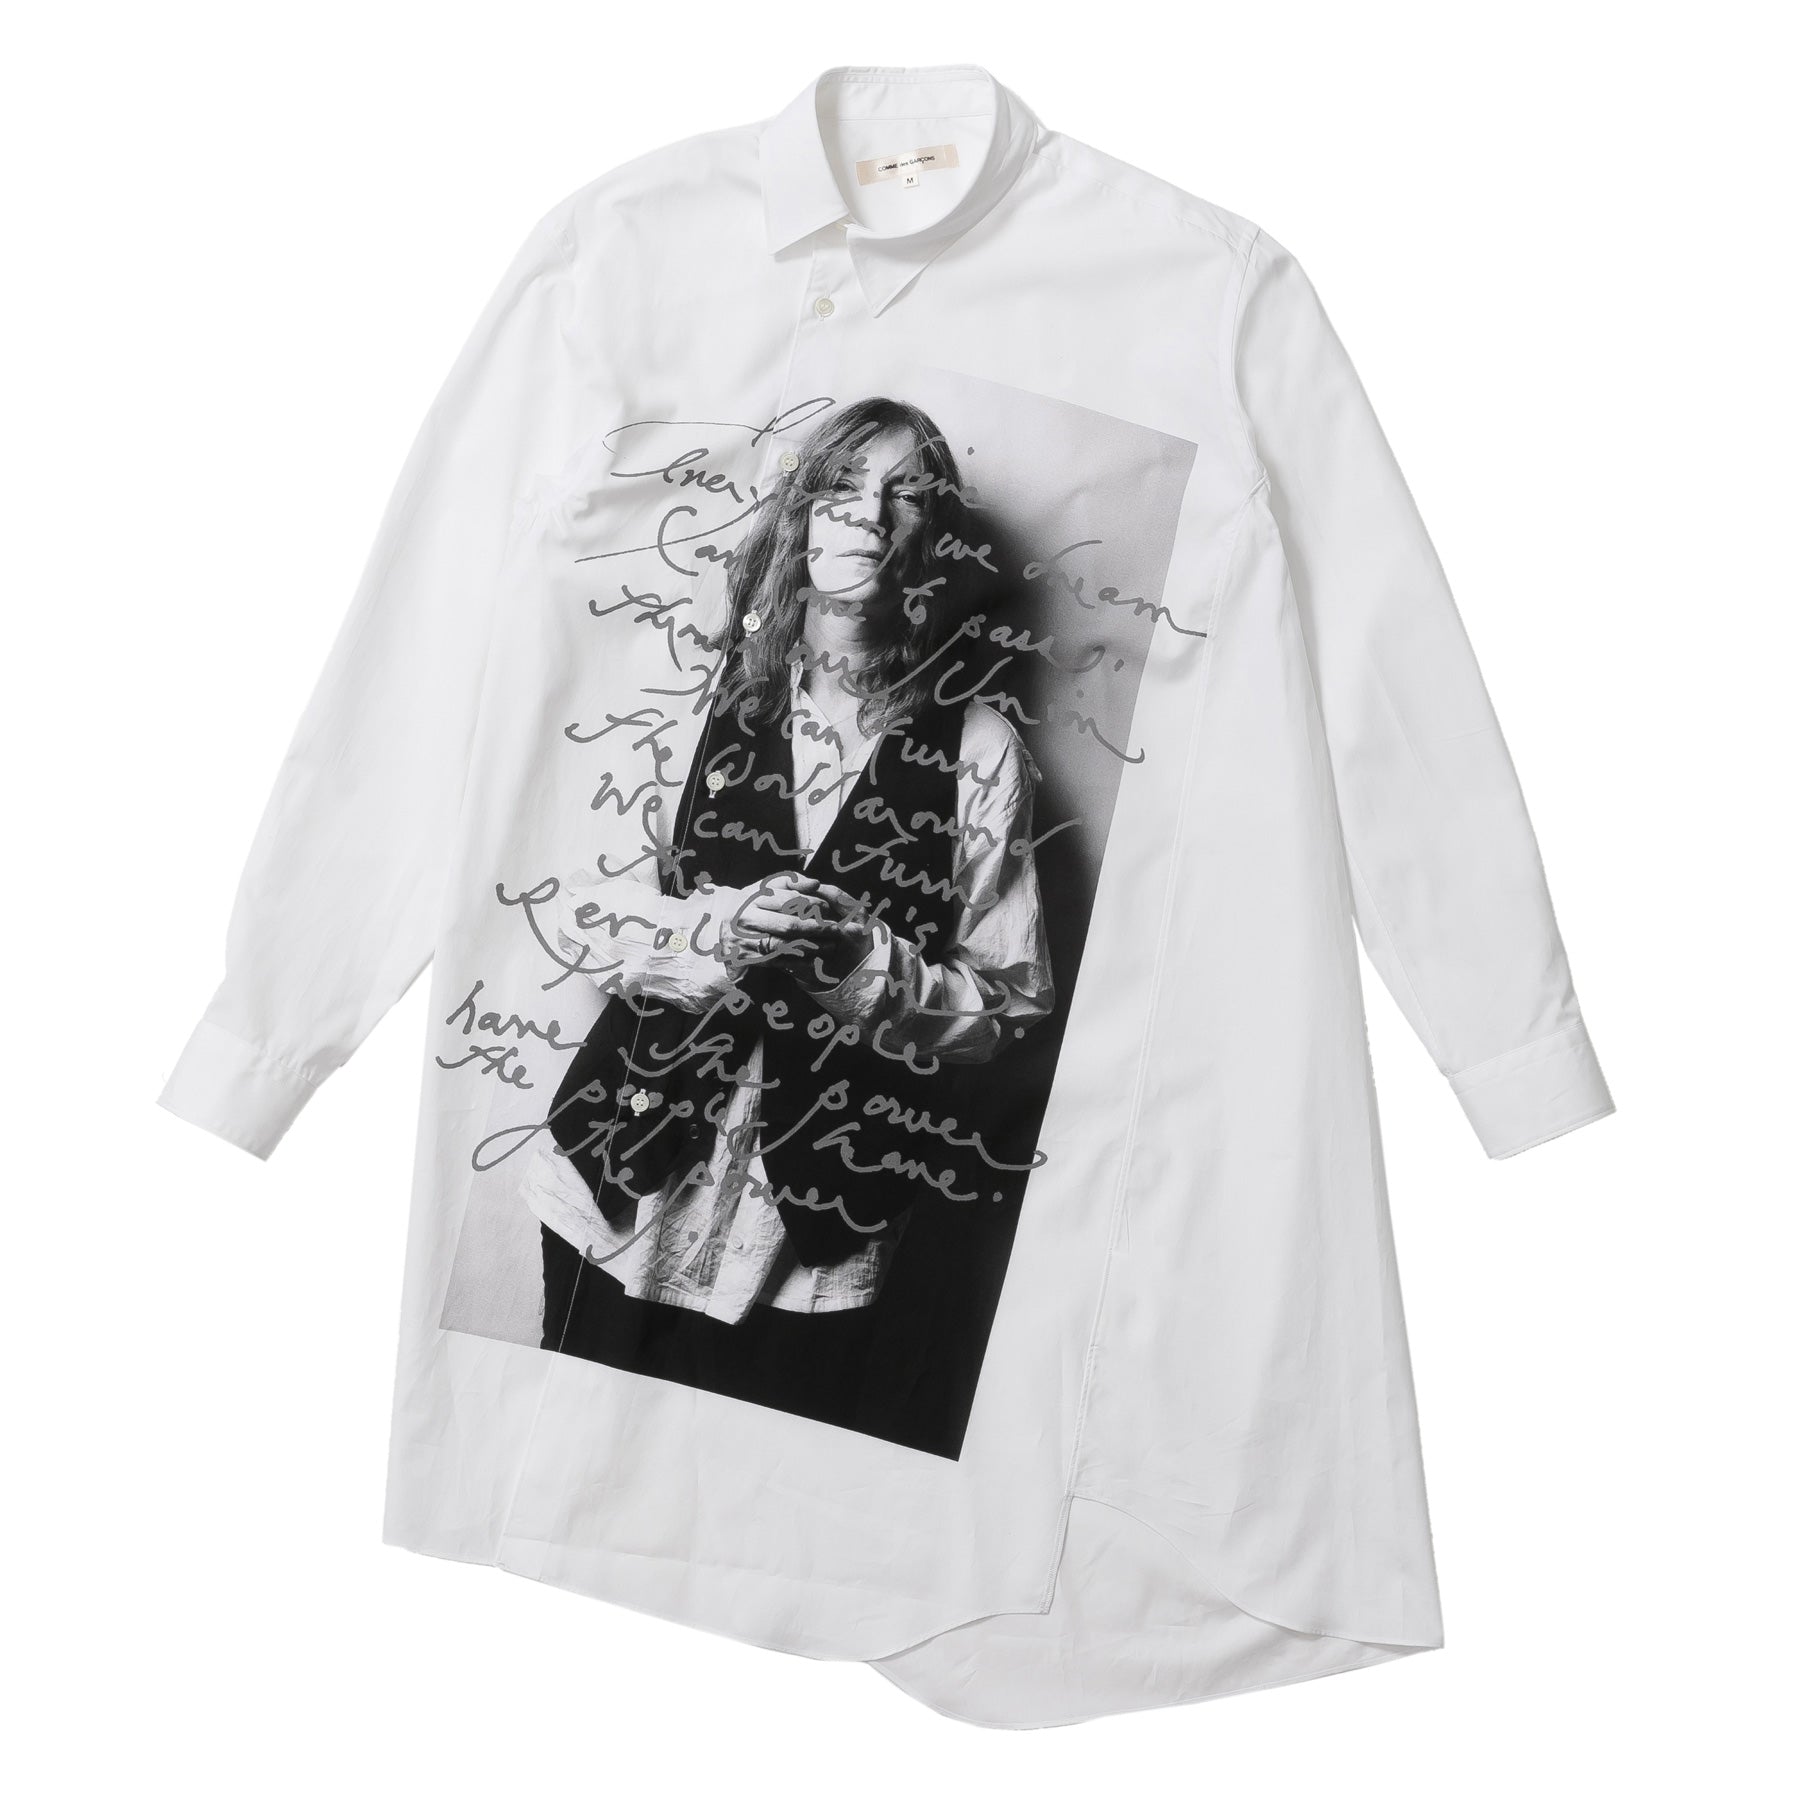 Switch Comme des Garçons - Patti Smith Shirt - (White)